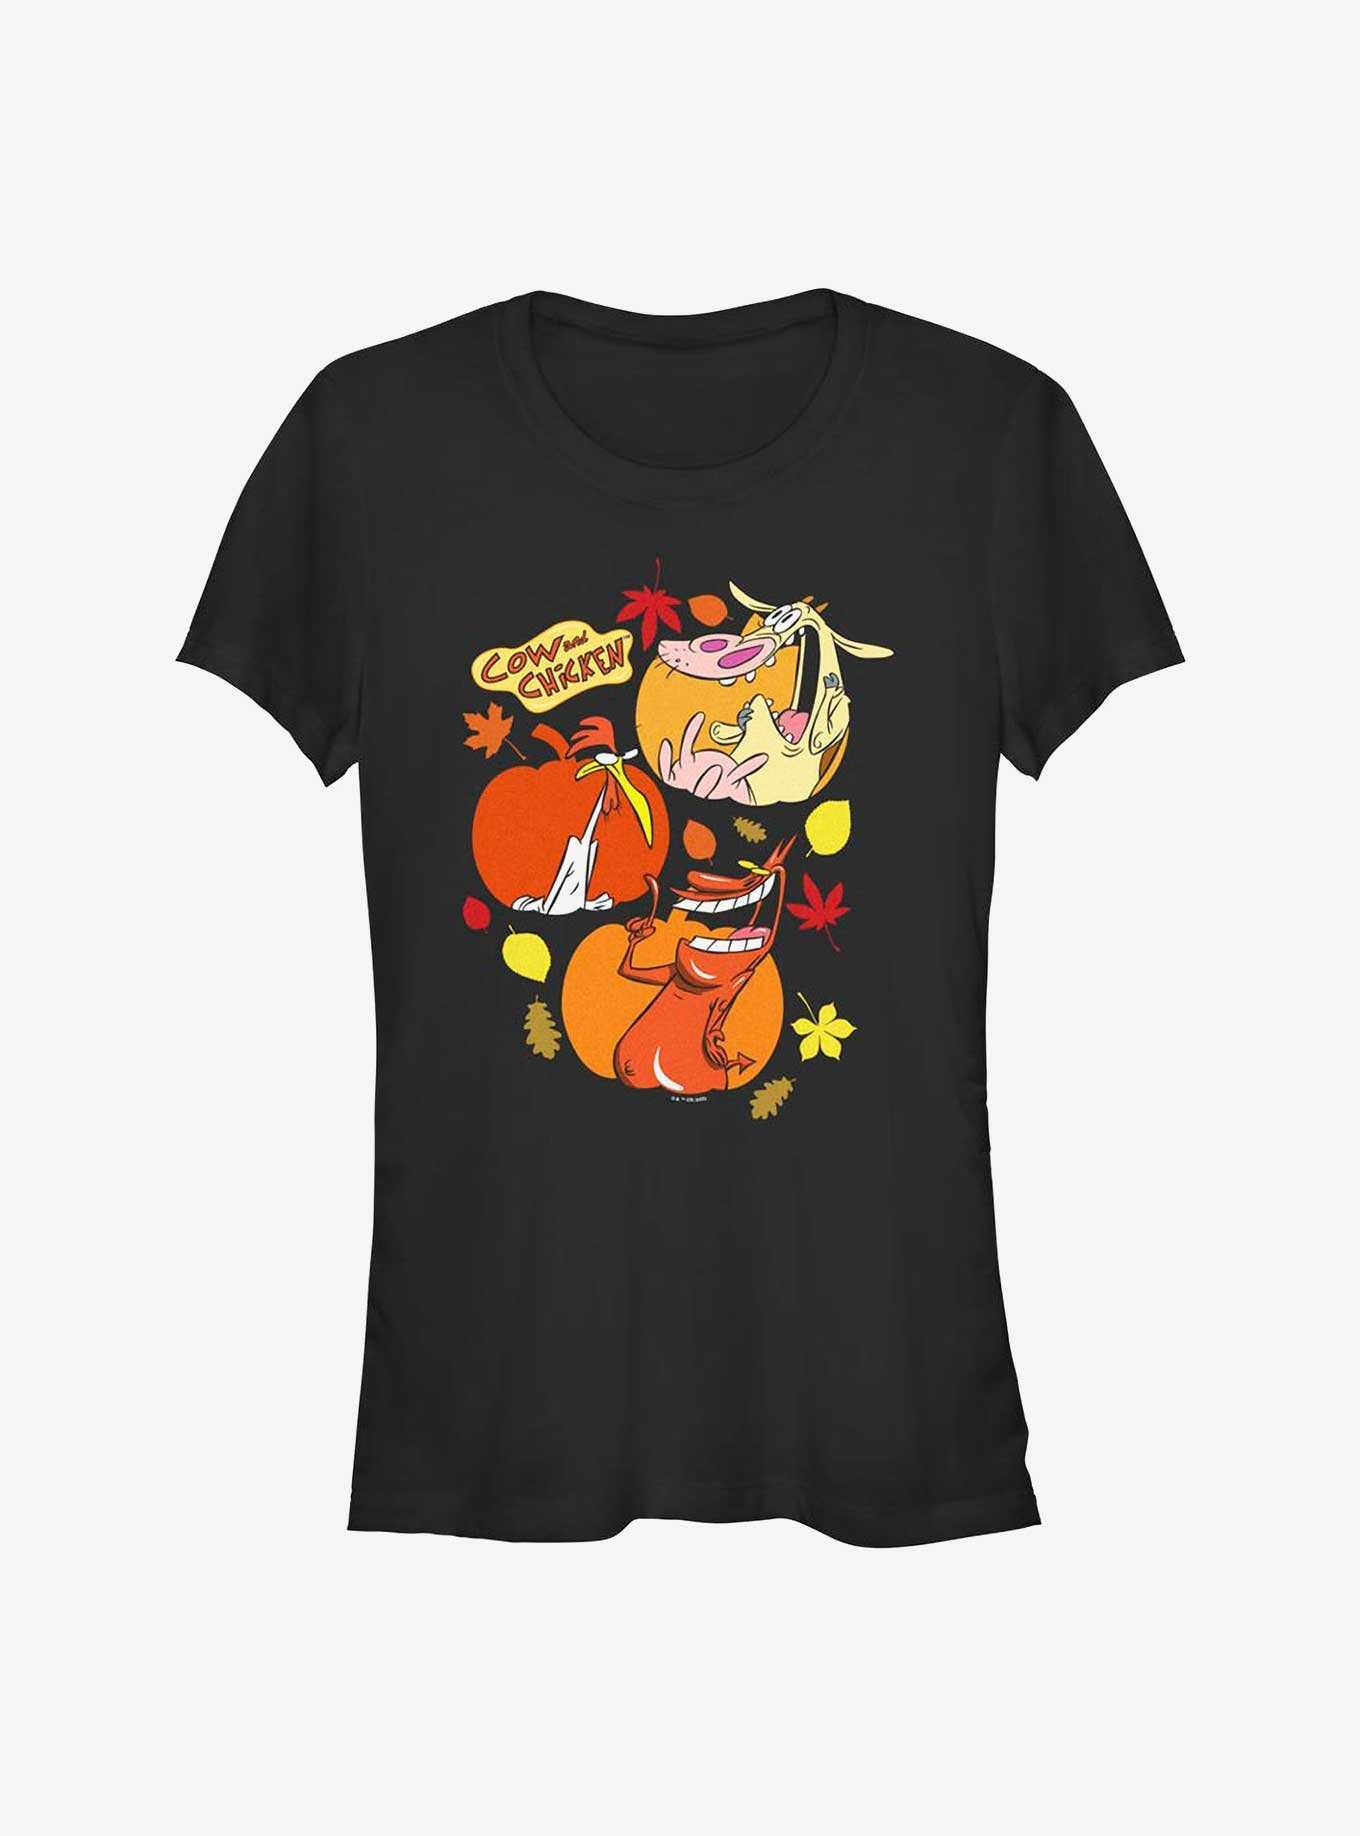 Cartoon Network Cow and Chicken Thankful Pumpkins Girls T-Shirt, , hi-res